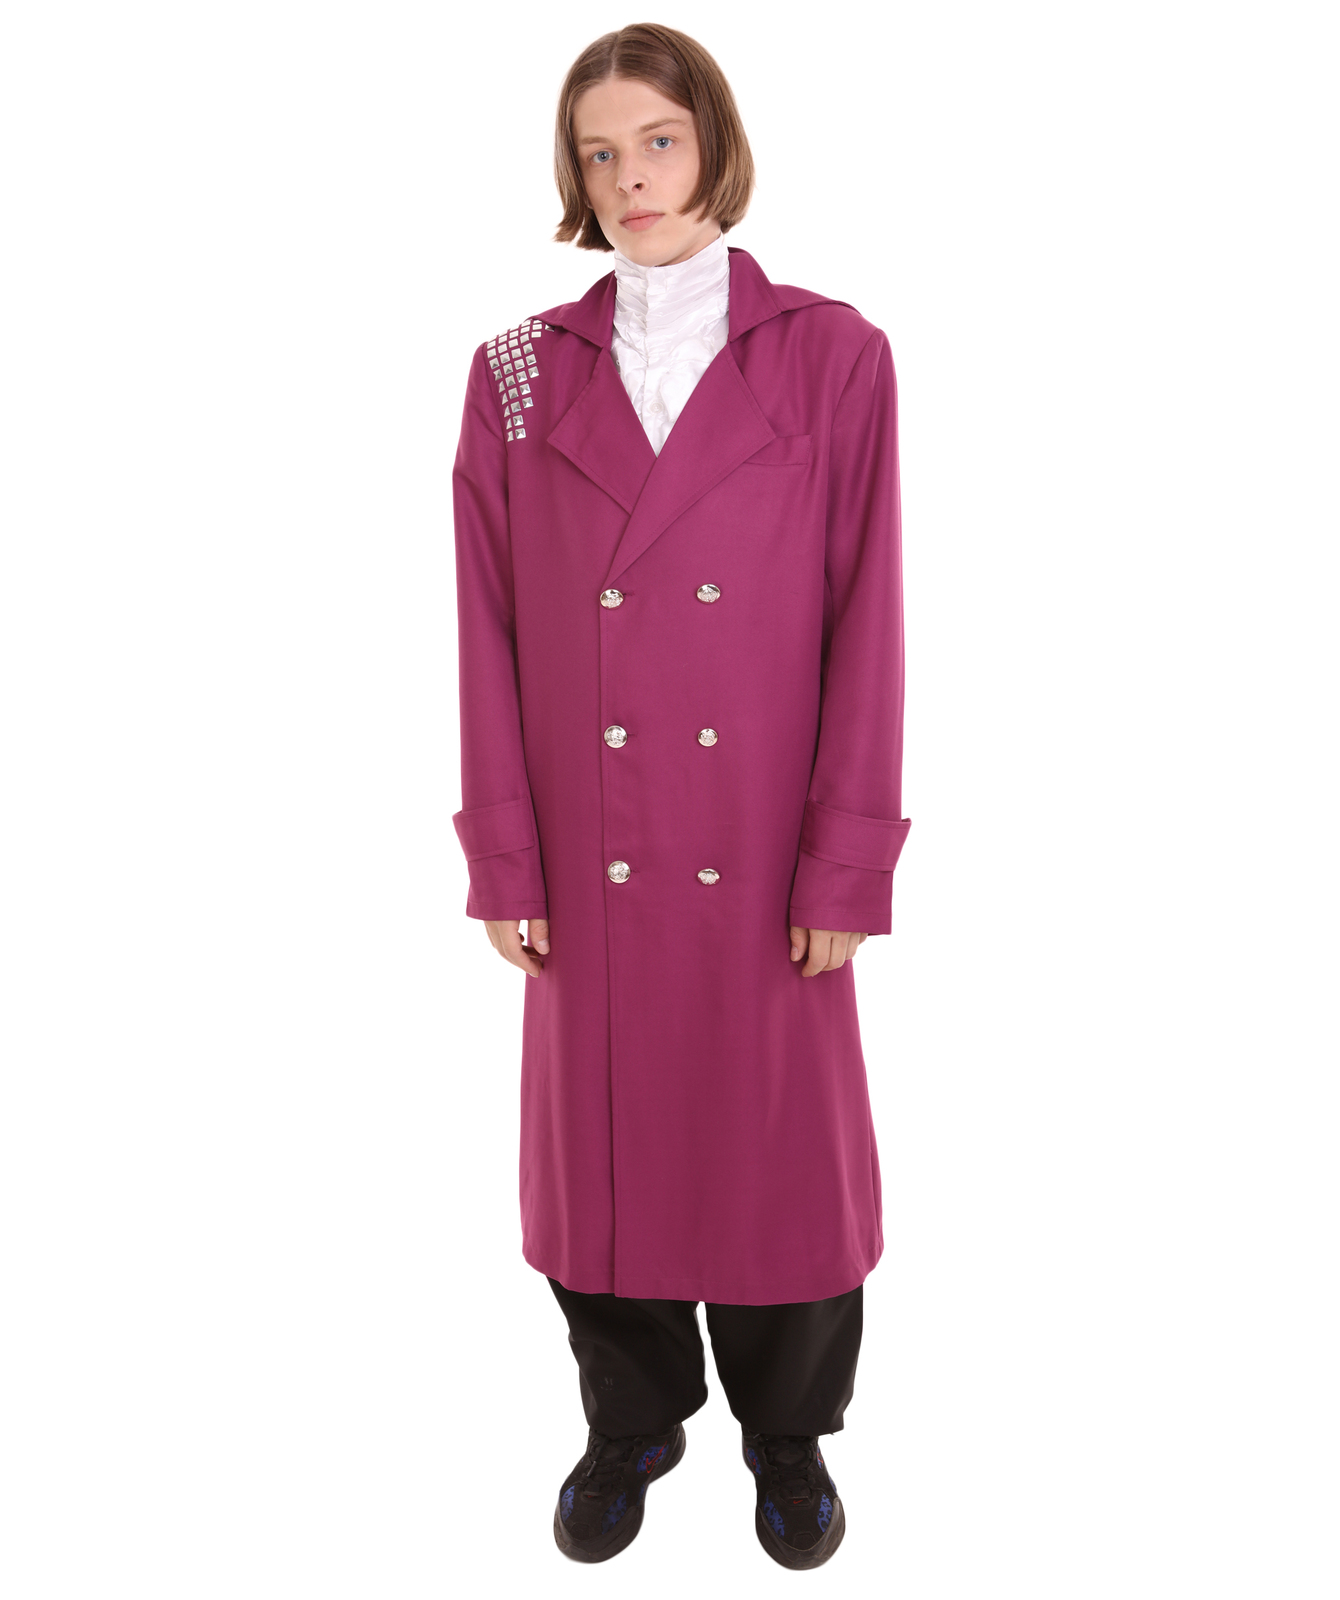 Adult Men's Costume for Cosplay Prince Purple Rain Coat HC-038